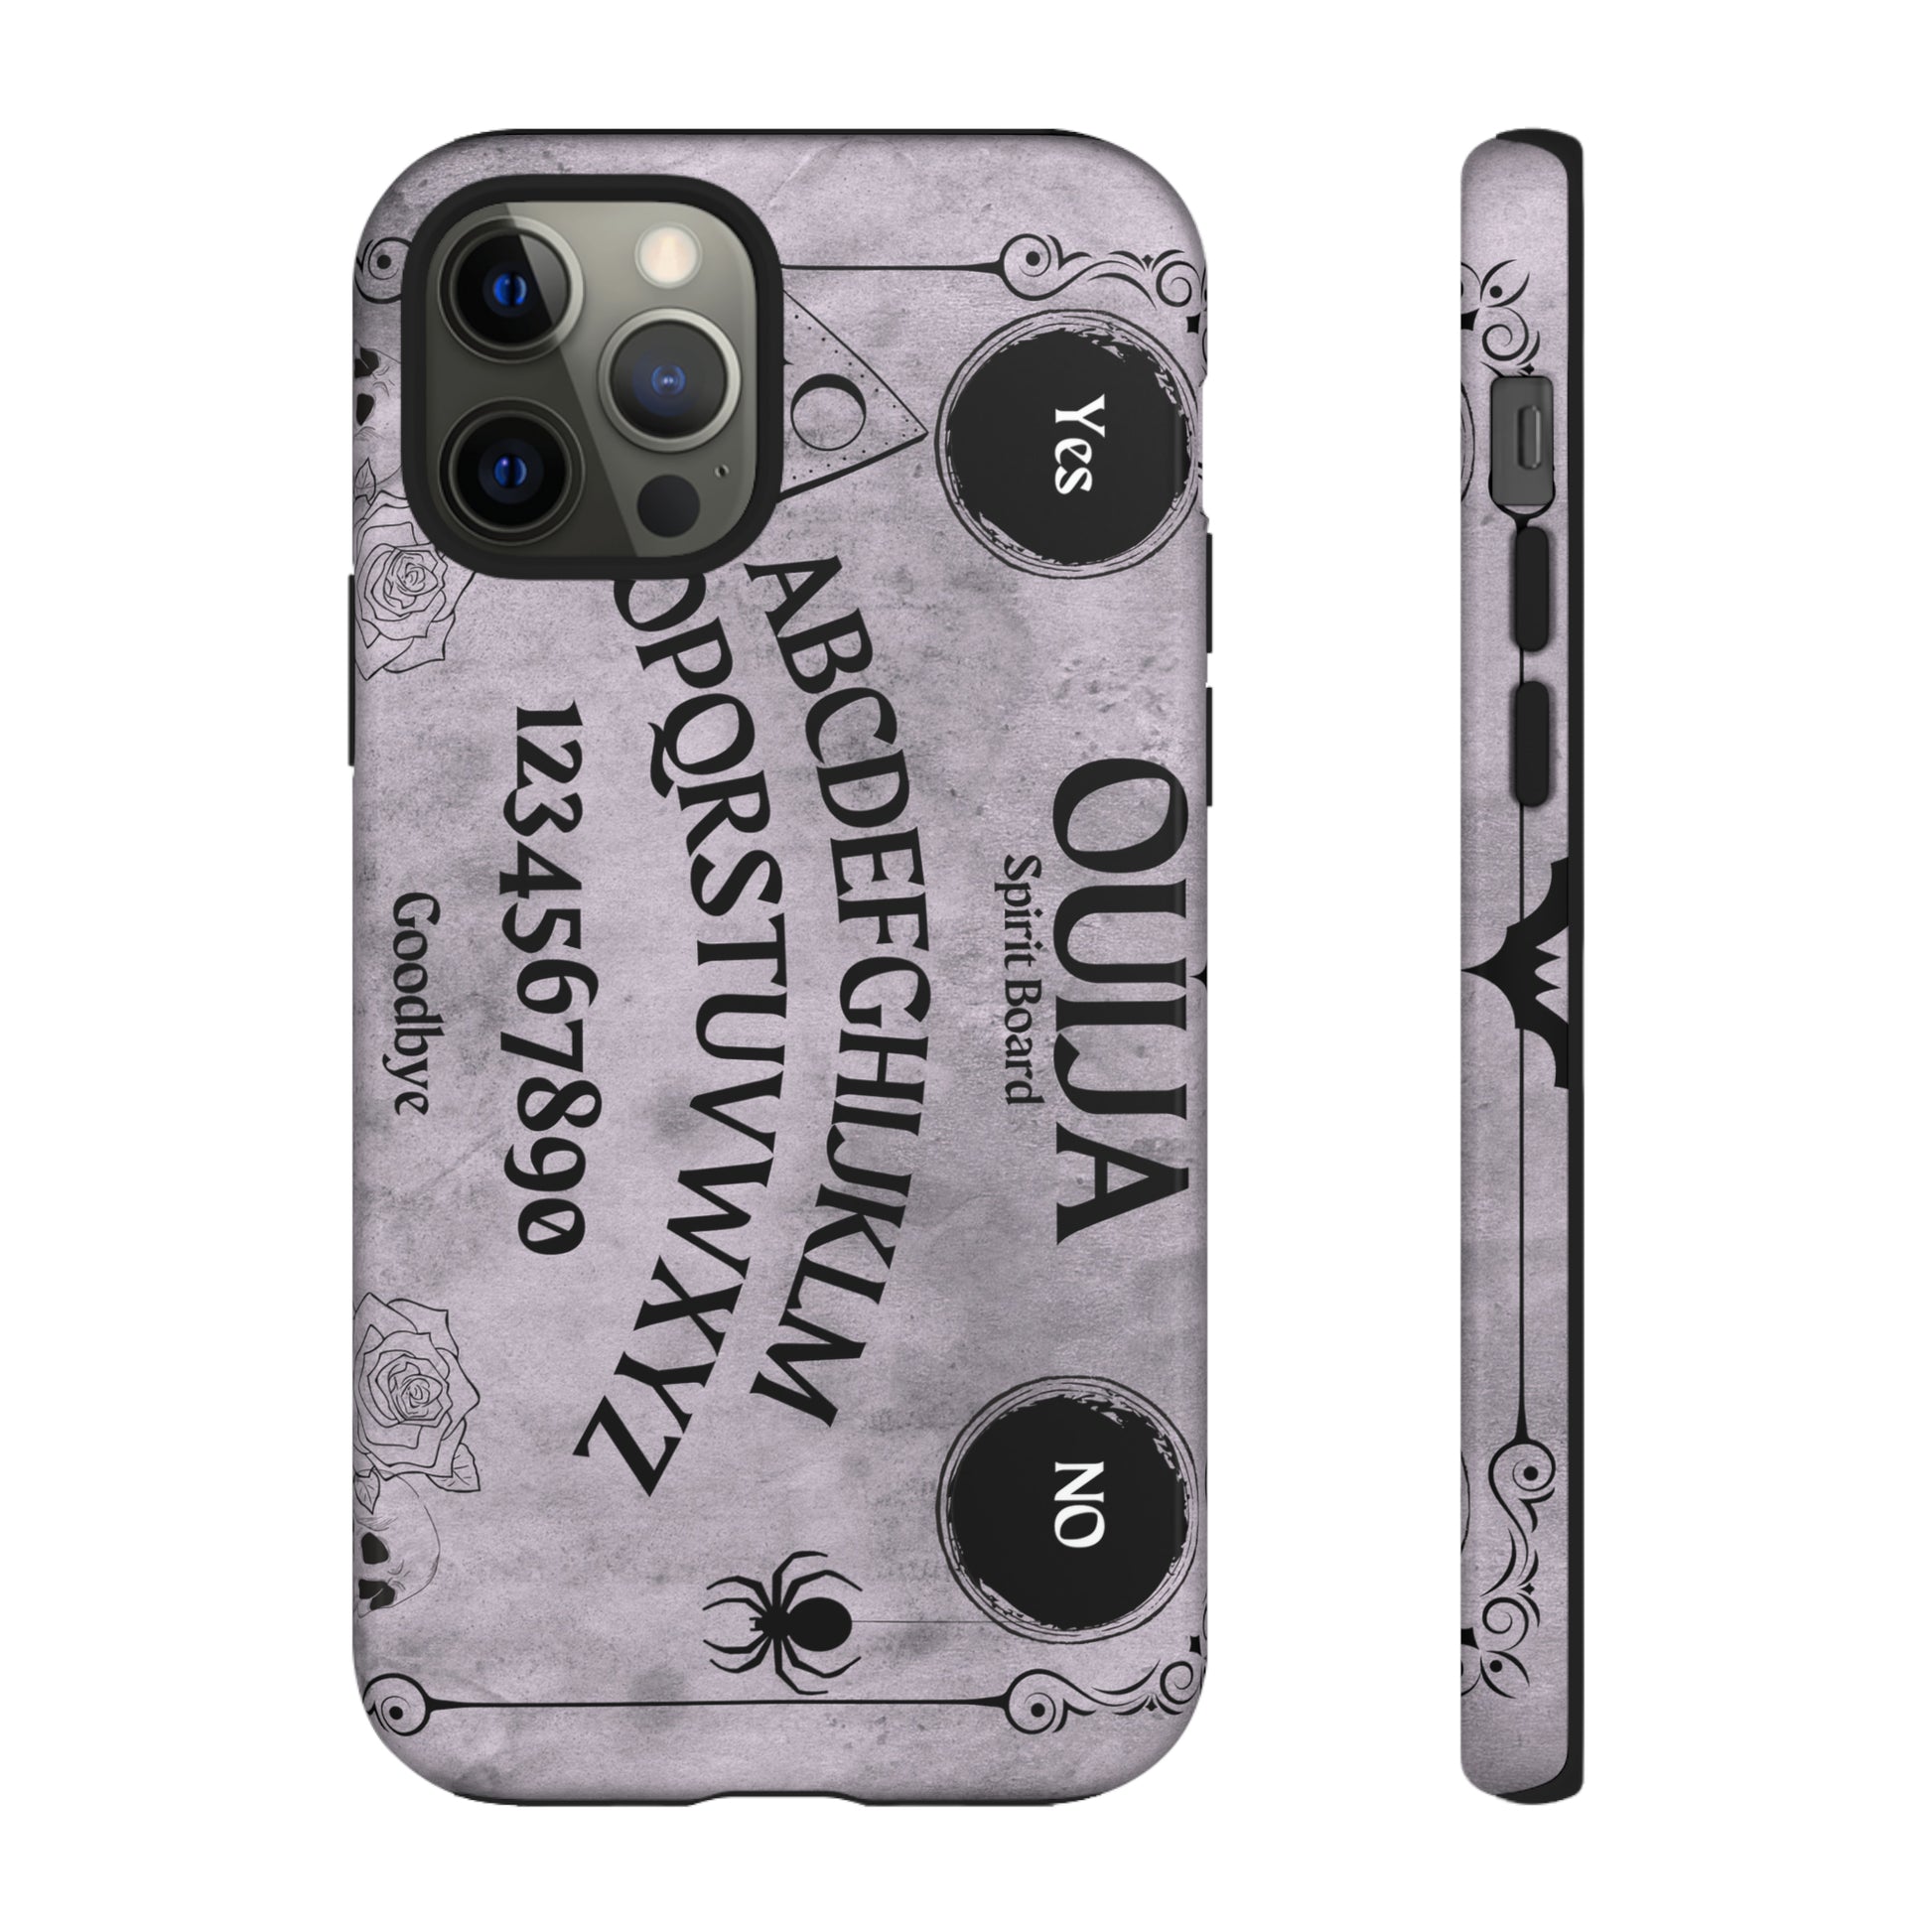 Ouija Board Tough Phone Cases For Samsung iPhone GooglePhone CaseVTZdesignsiPhone 12 ProGlossyAccessoriesGlossyhalloween